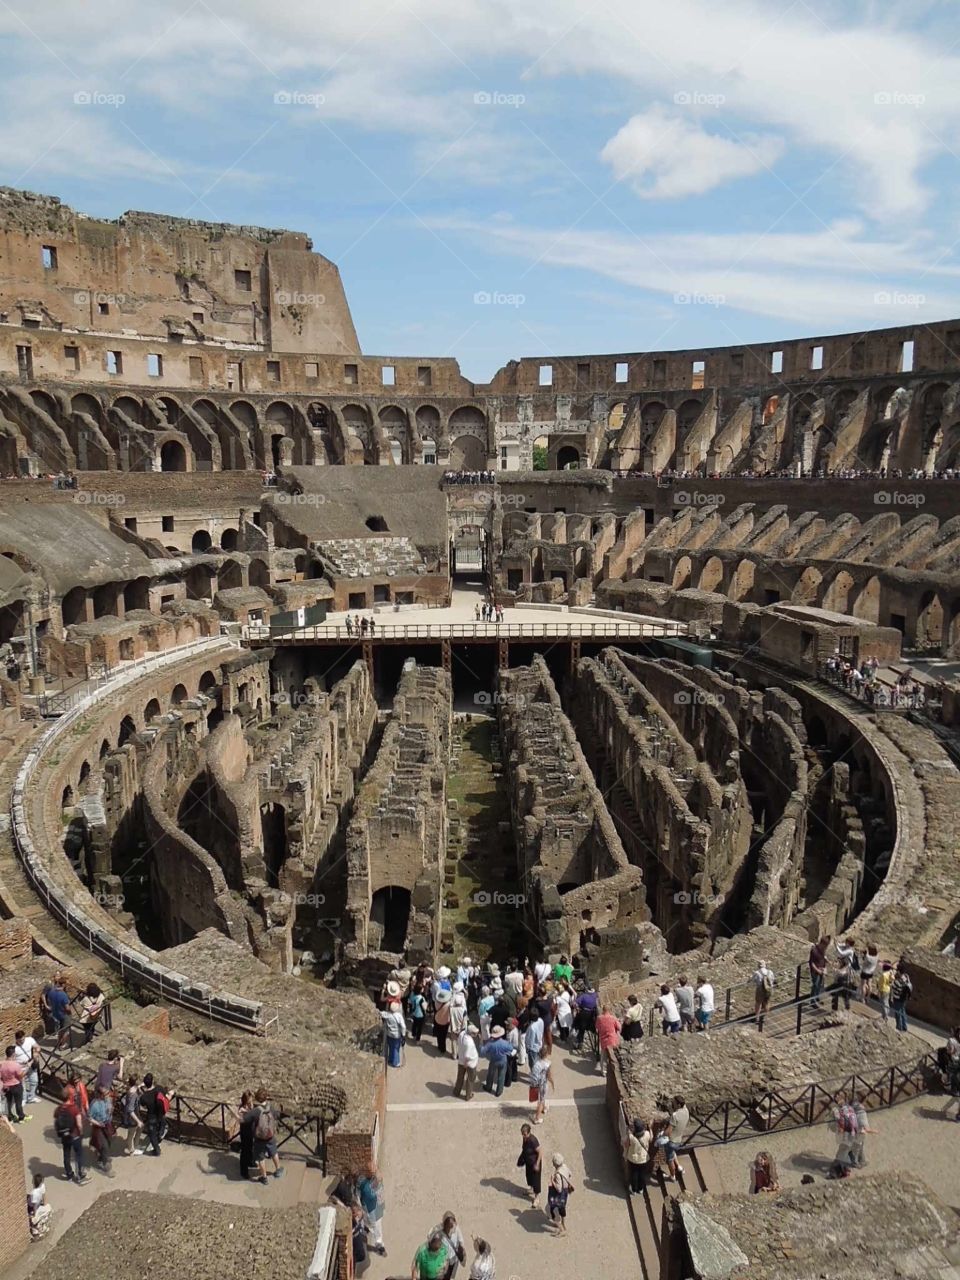 Colosseum. Interior of the Colosseum in Rome, Italy